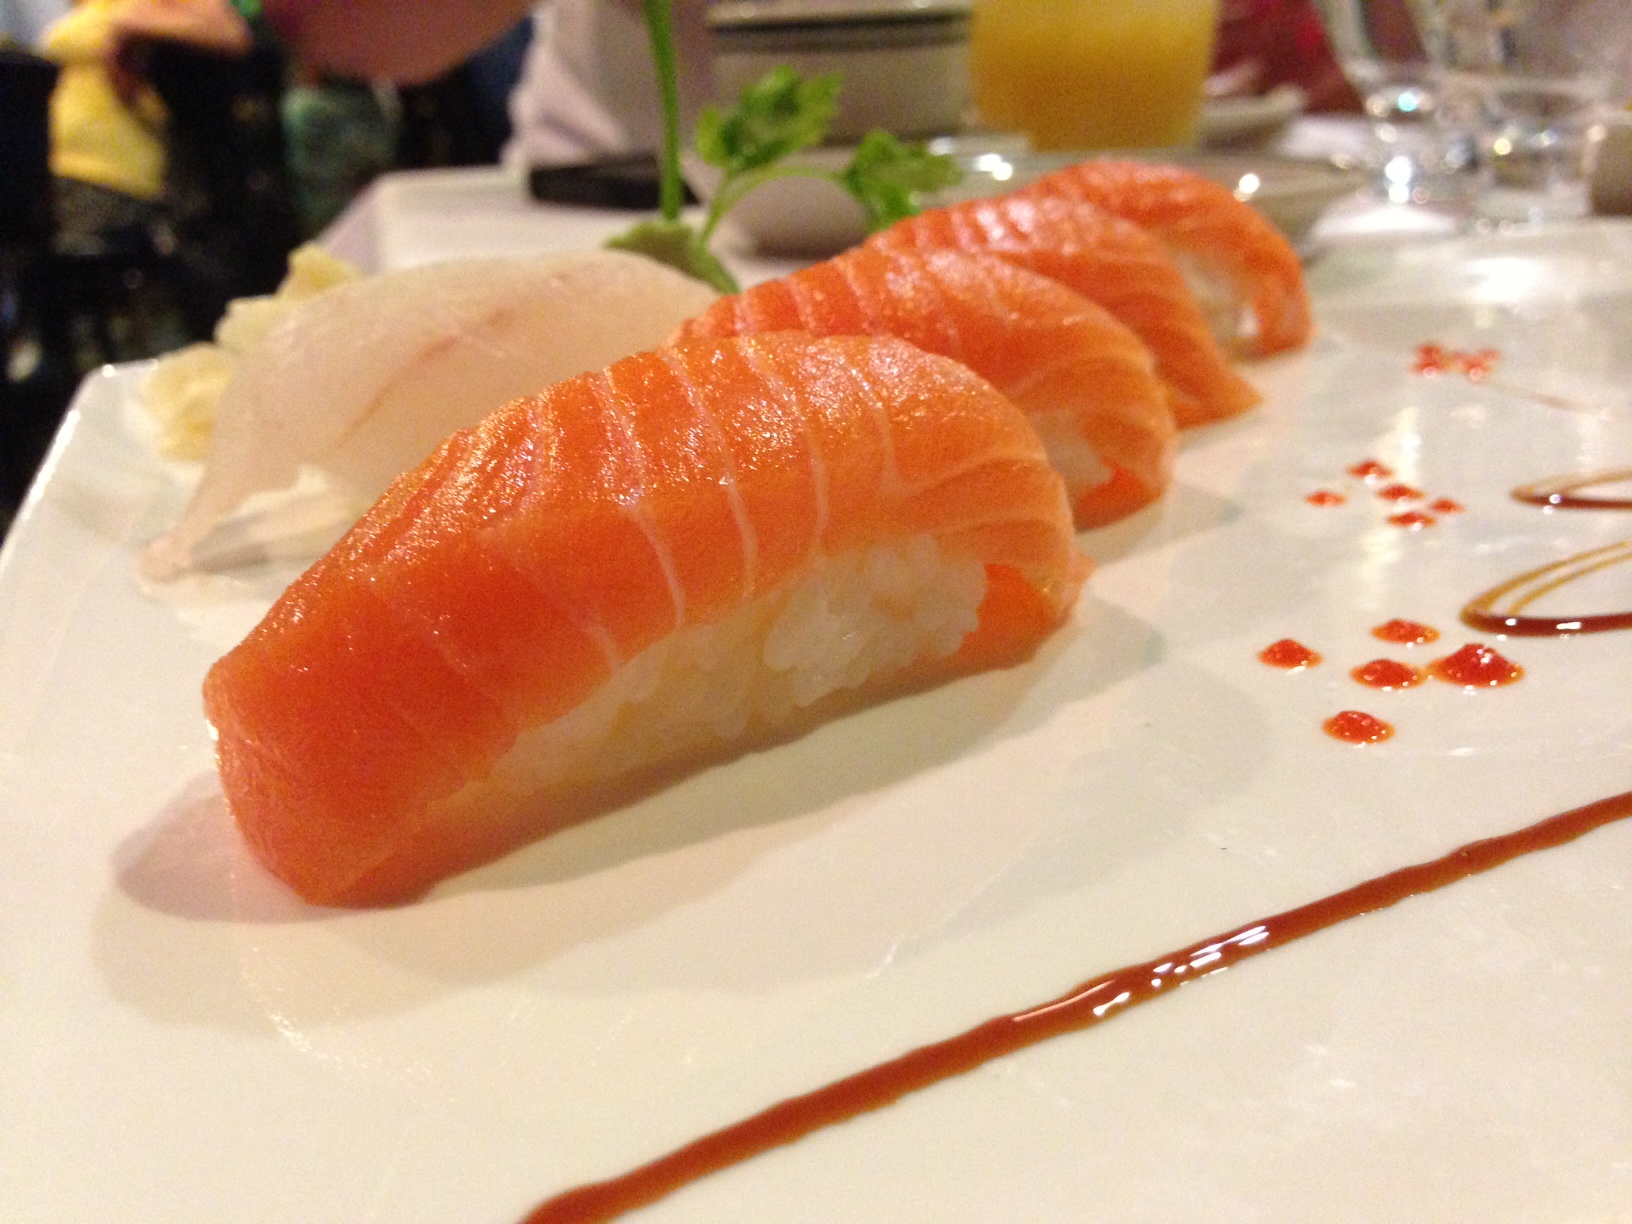 Nothing like some FRESH salmon sushi on deck!